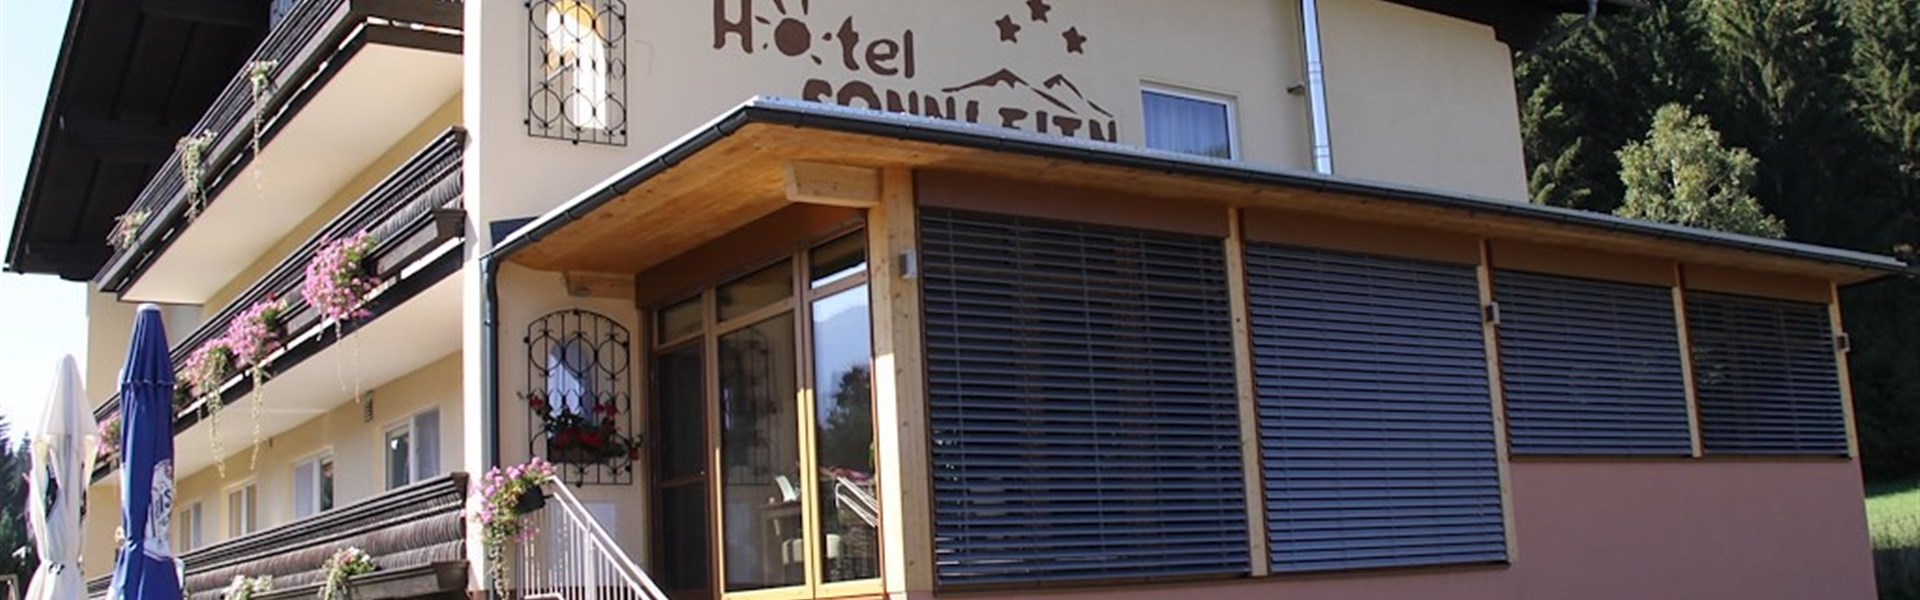 Hotel Sonnleitn (S) - 